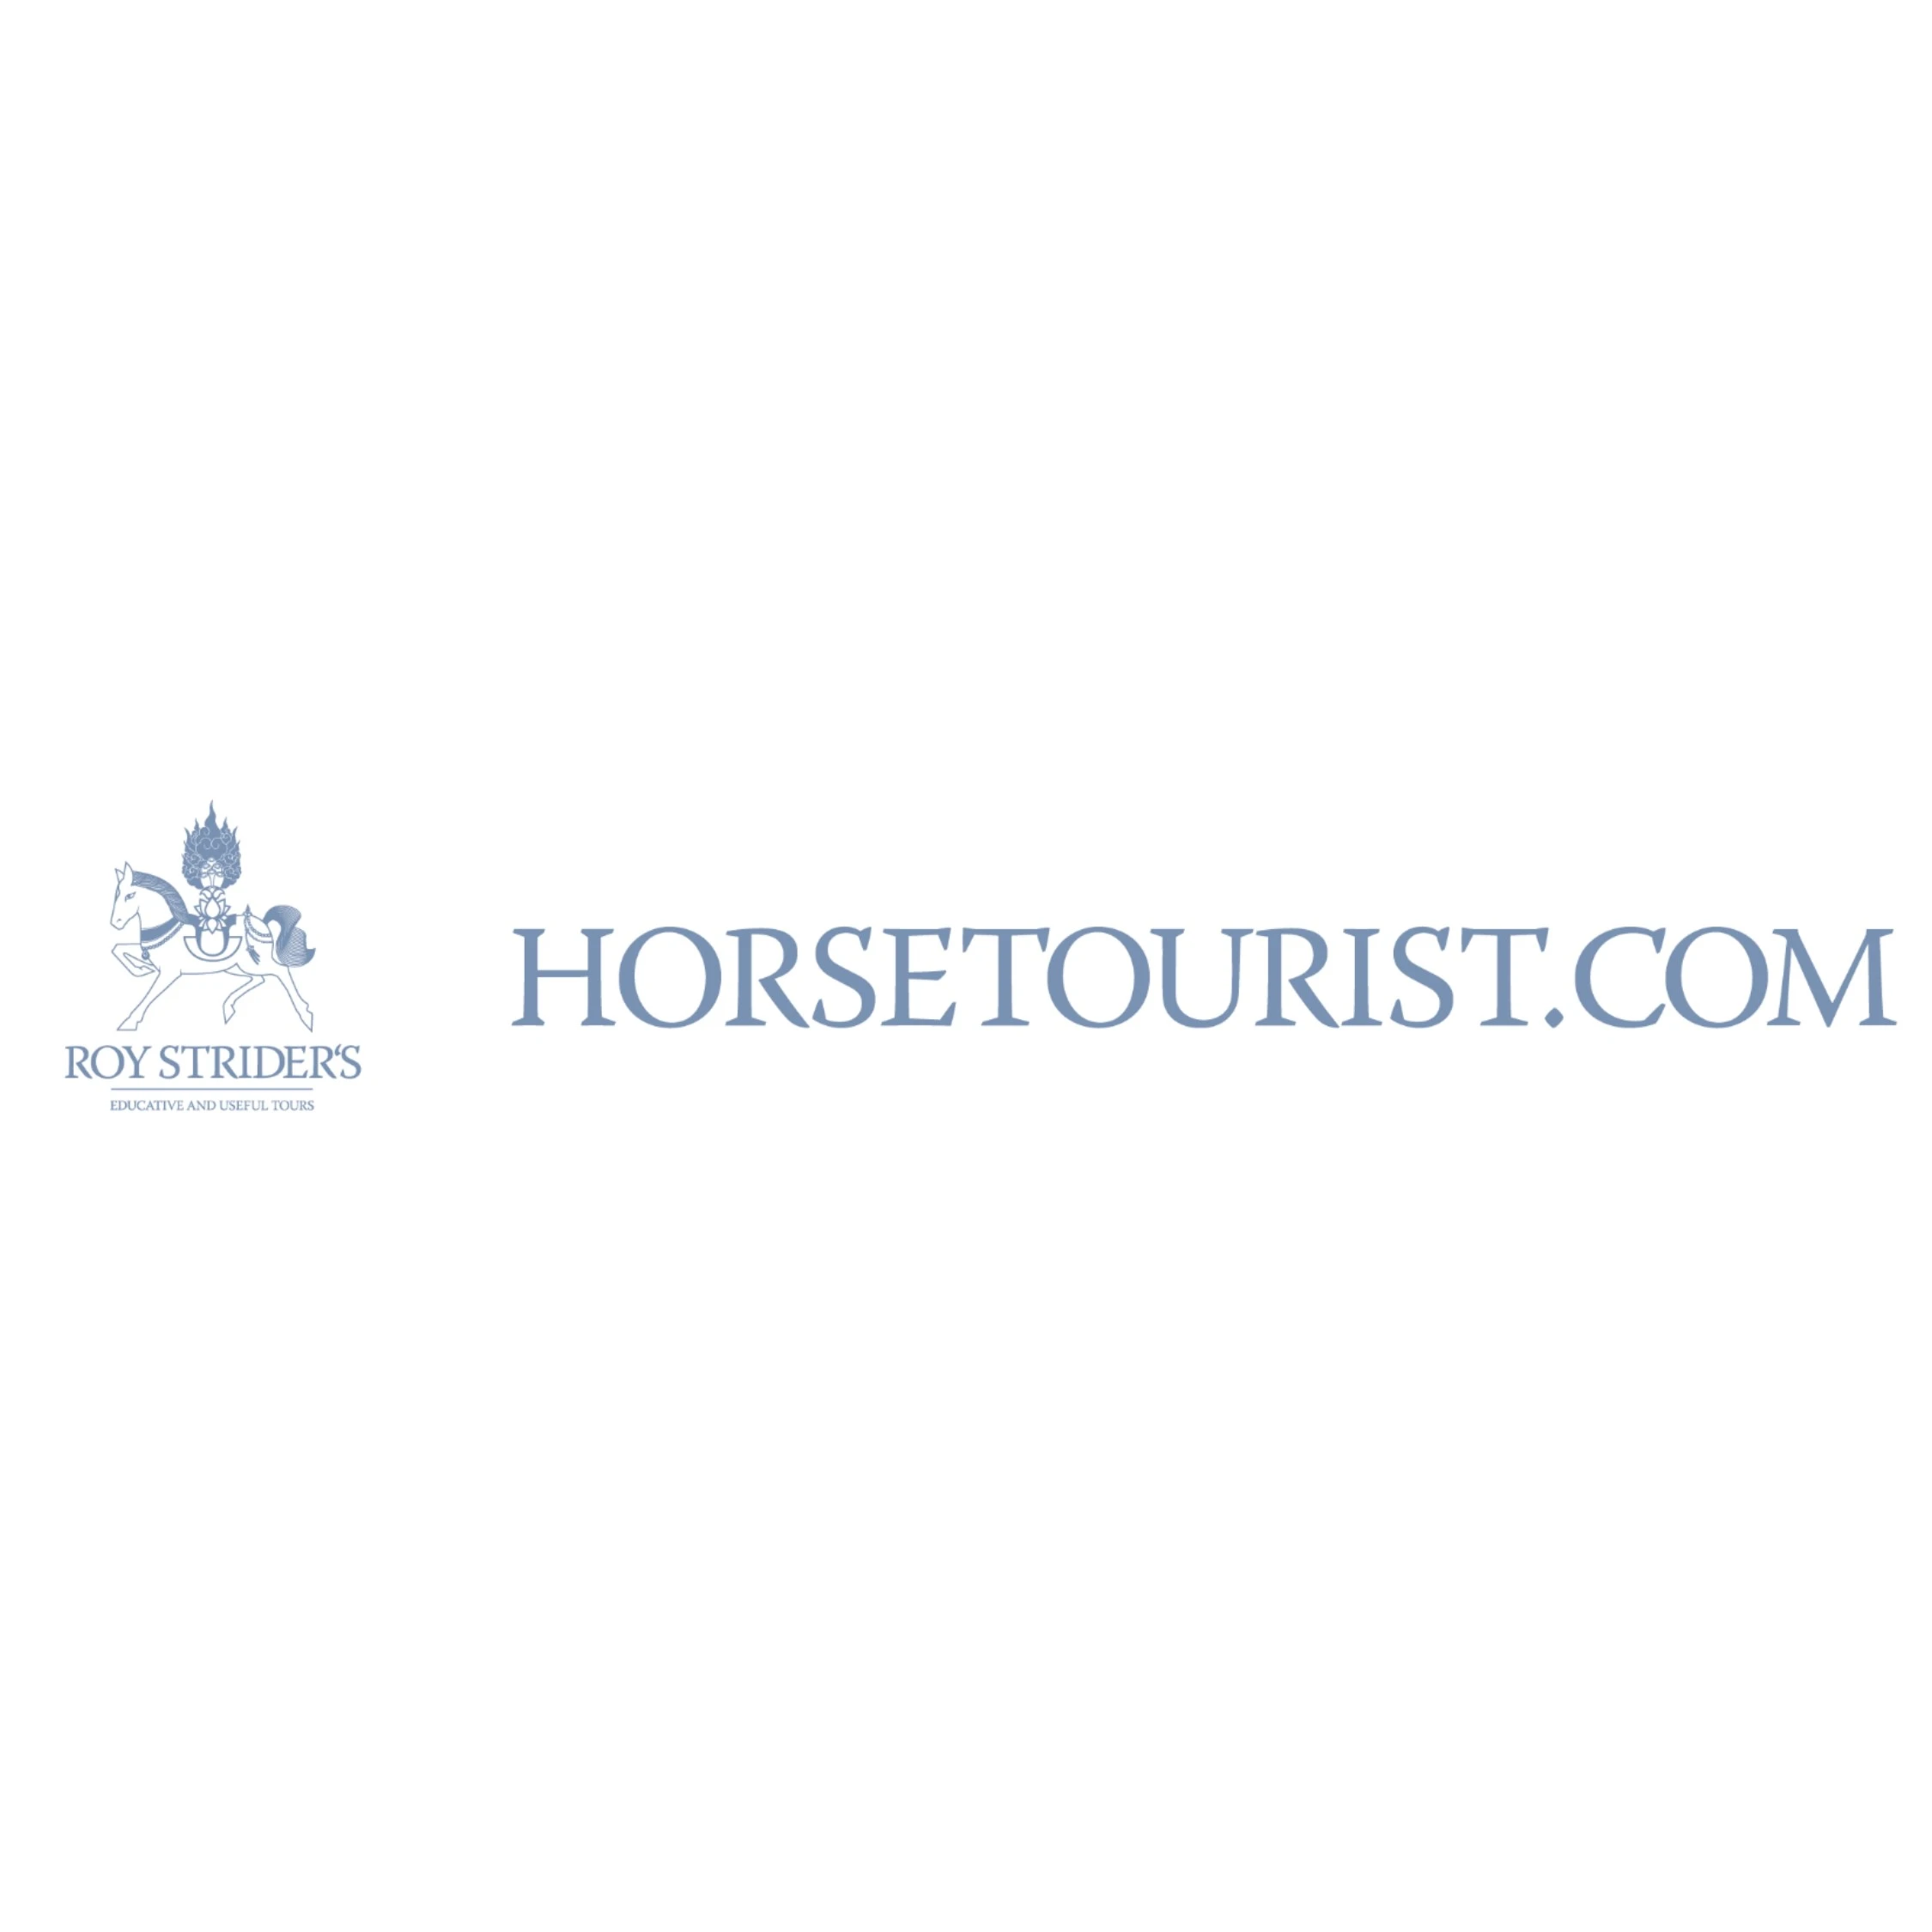 housetourist logo page 0001